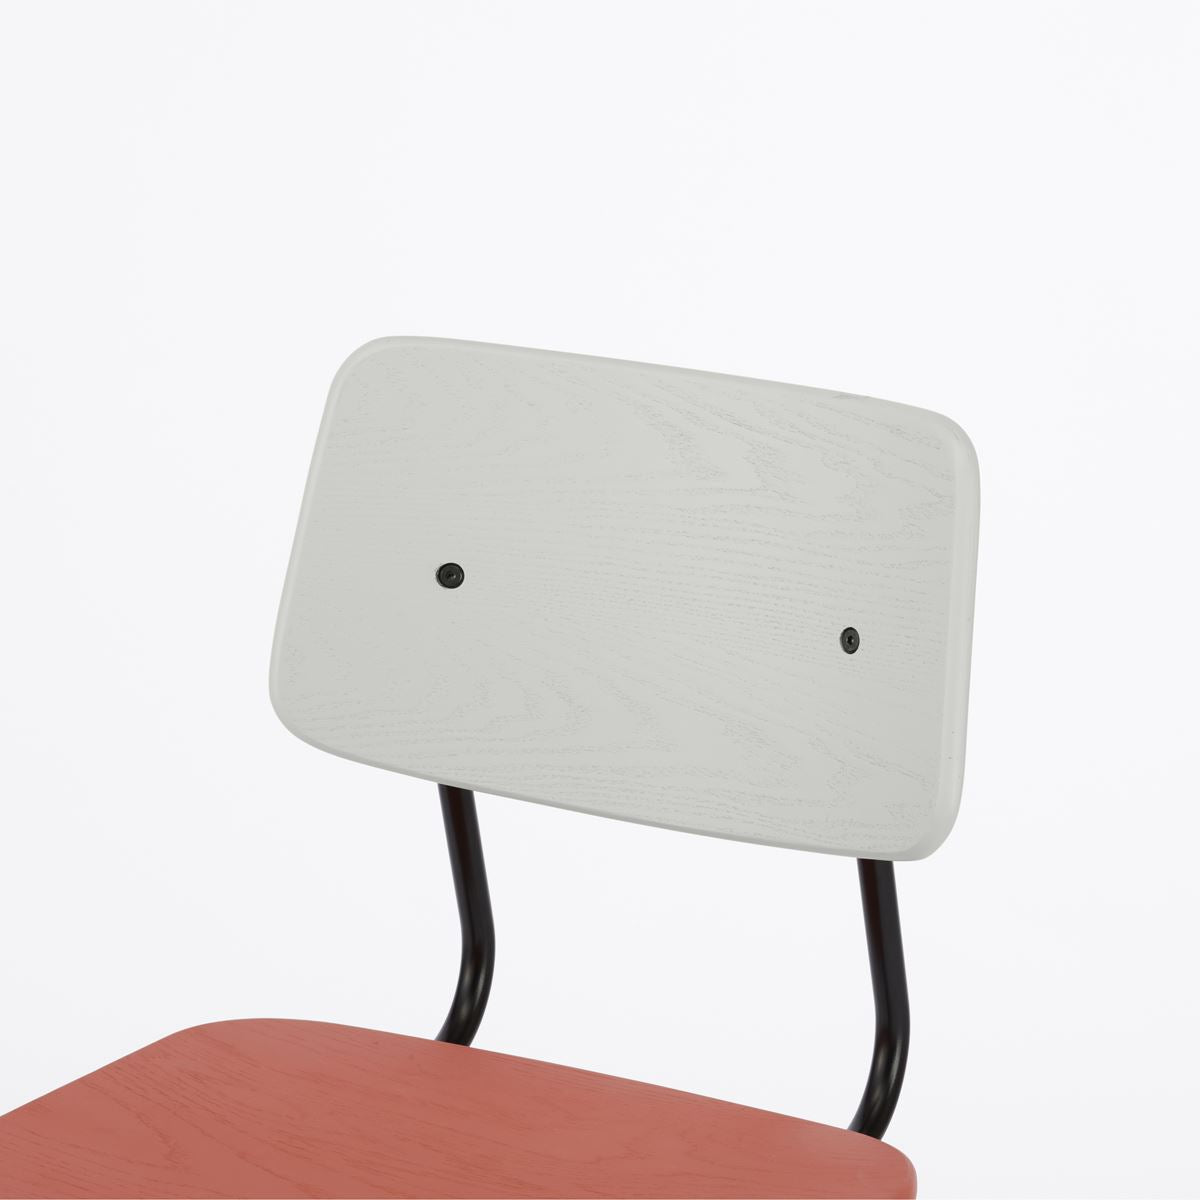 KUUM Chair shikaku - Gray x Pink x Black Steel Frame / クーム チェア シカク